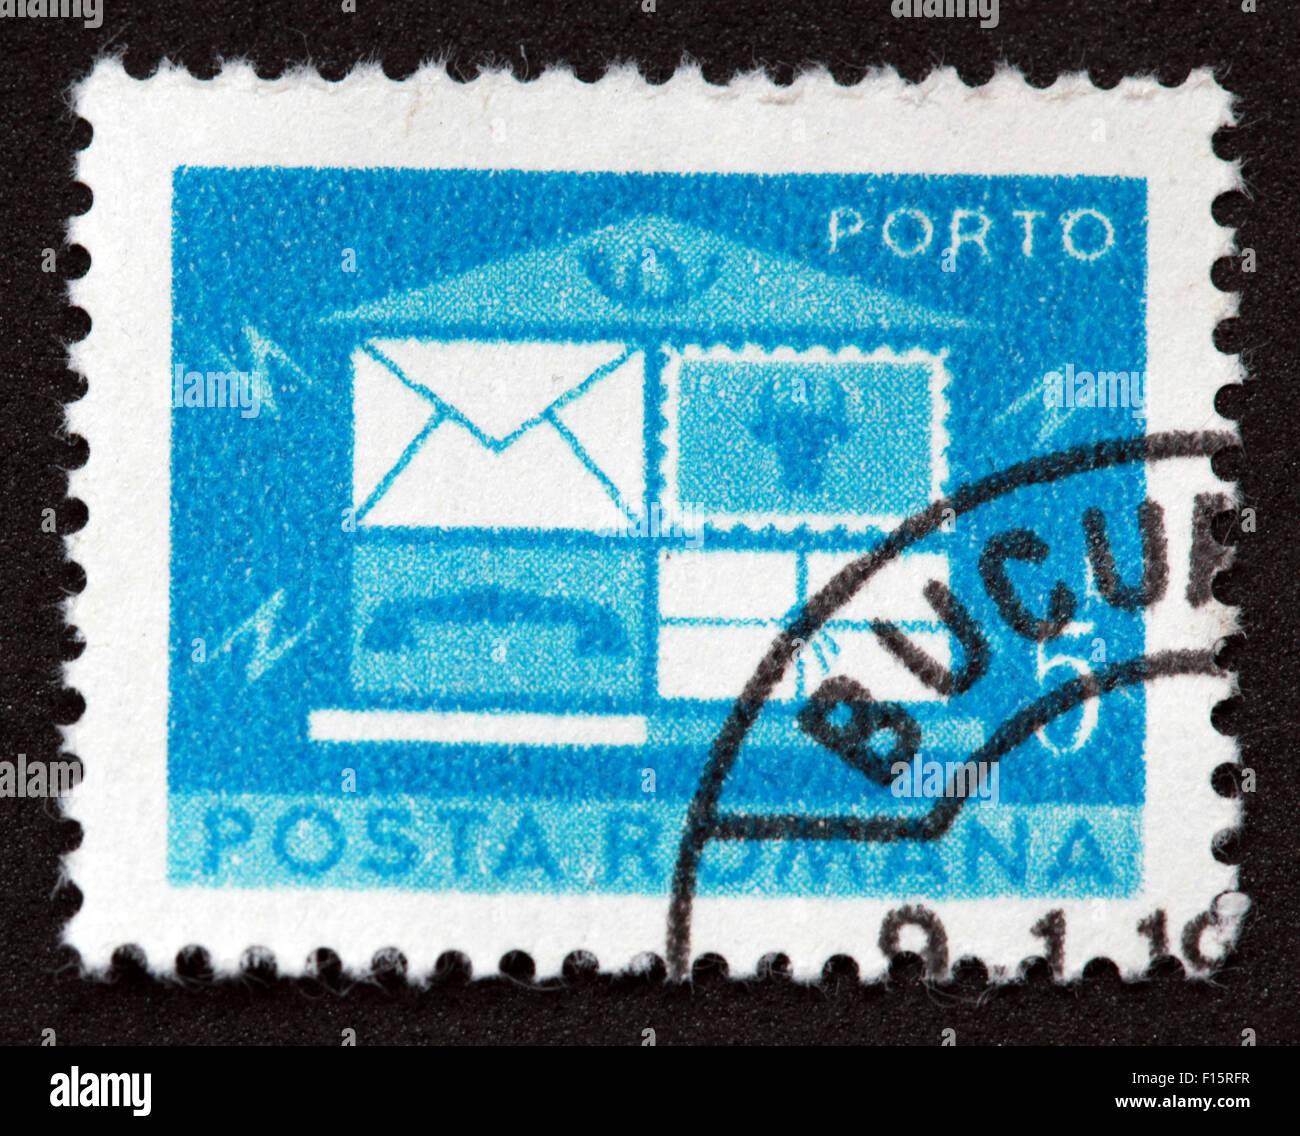 Posta Romana 5 Stamp Stock Photo